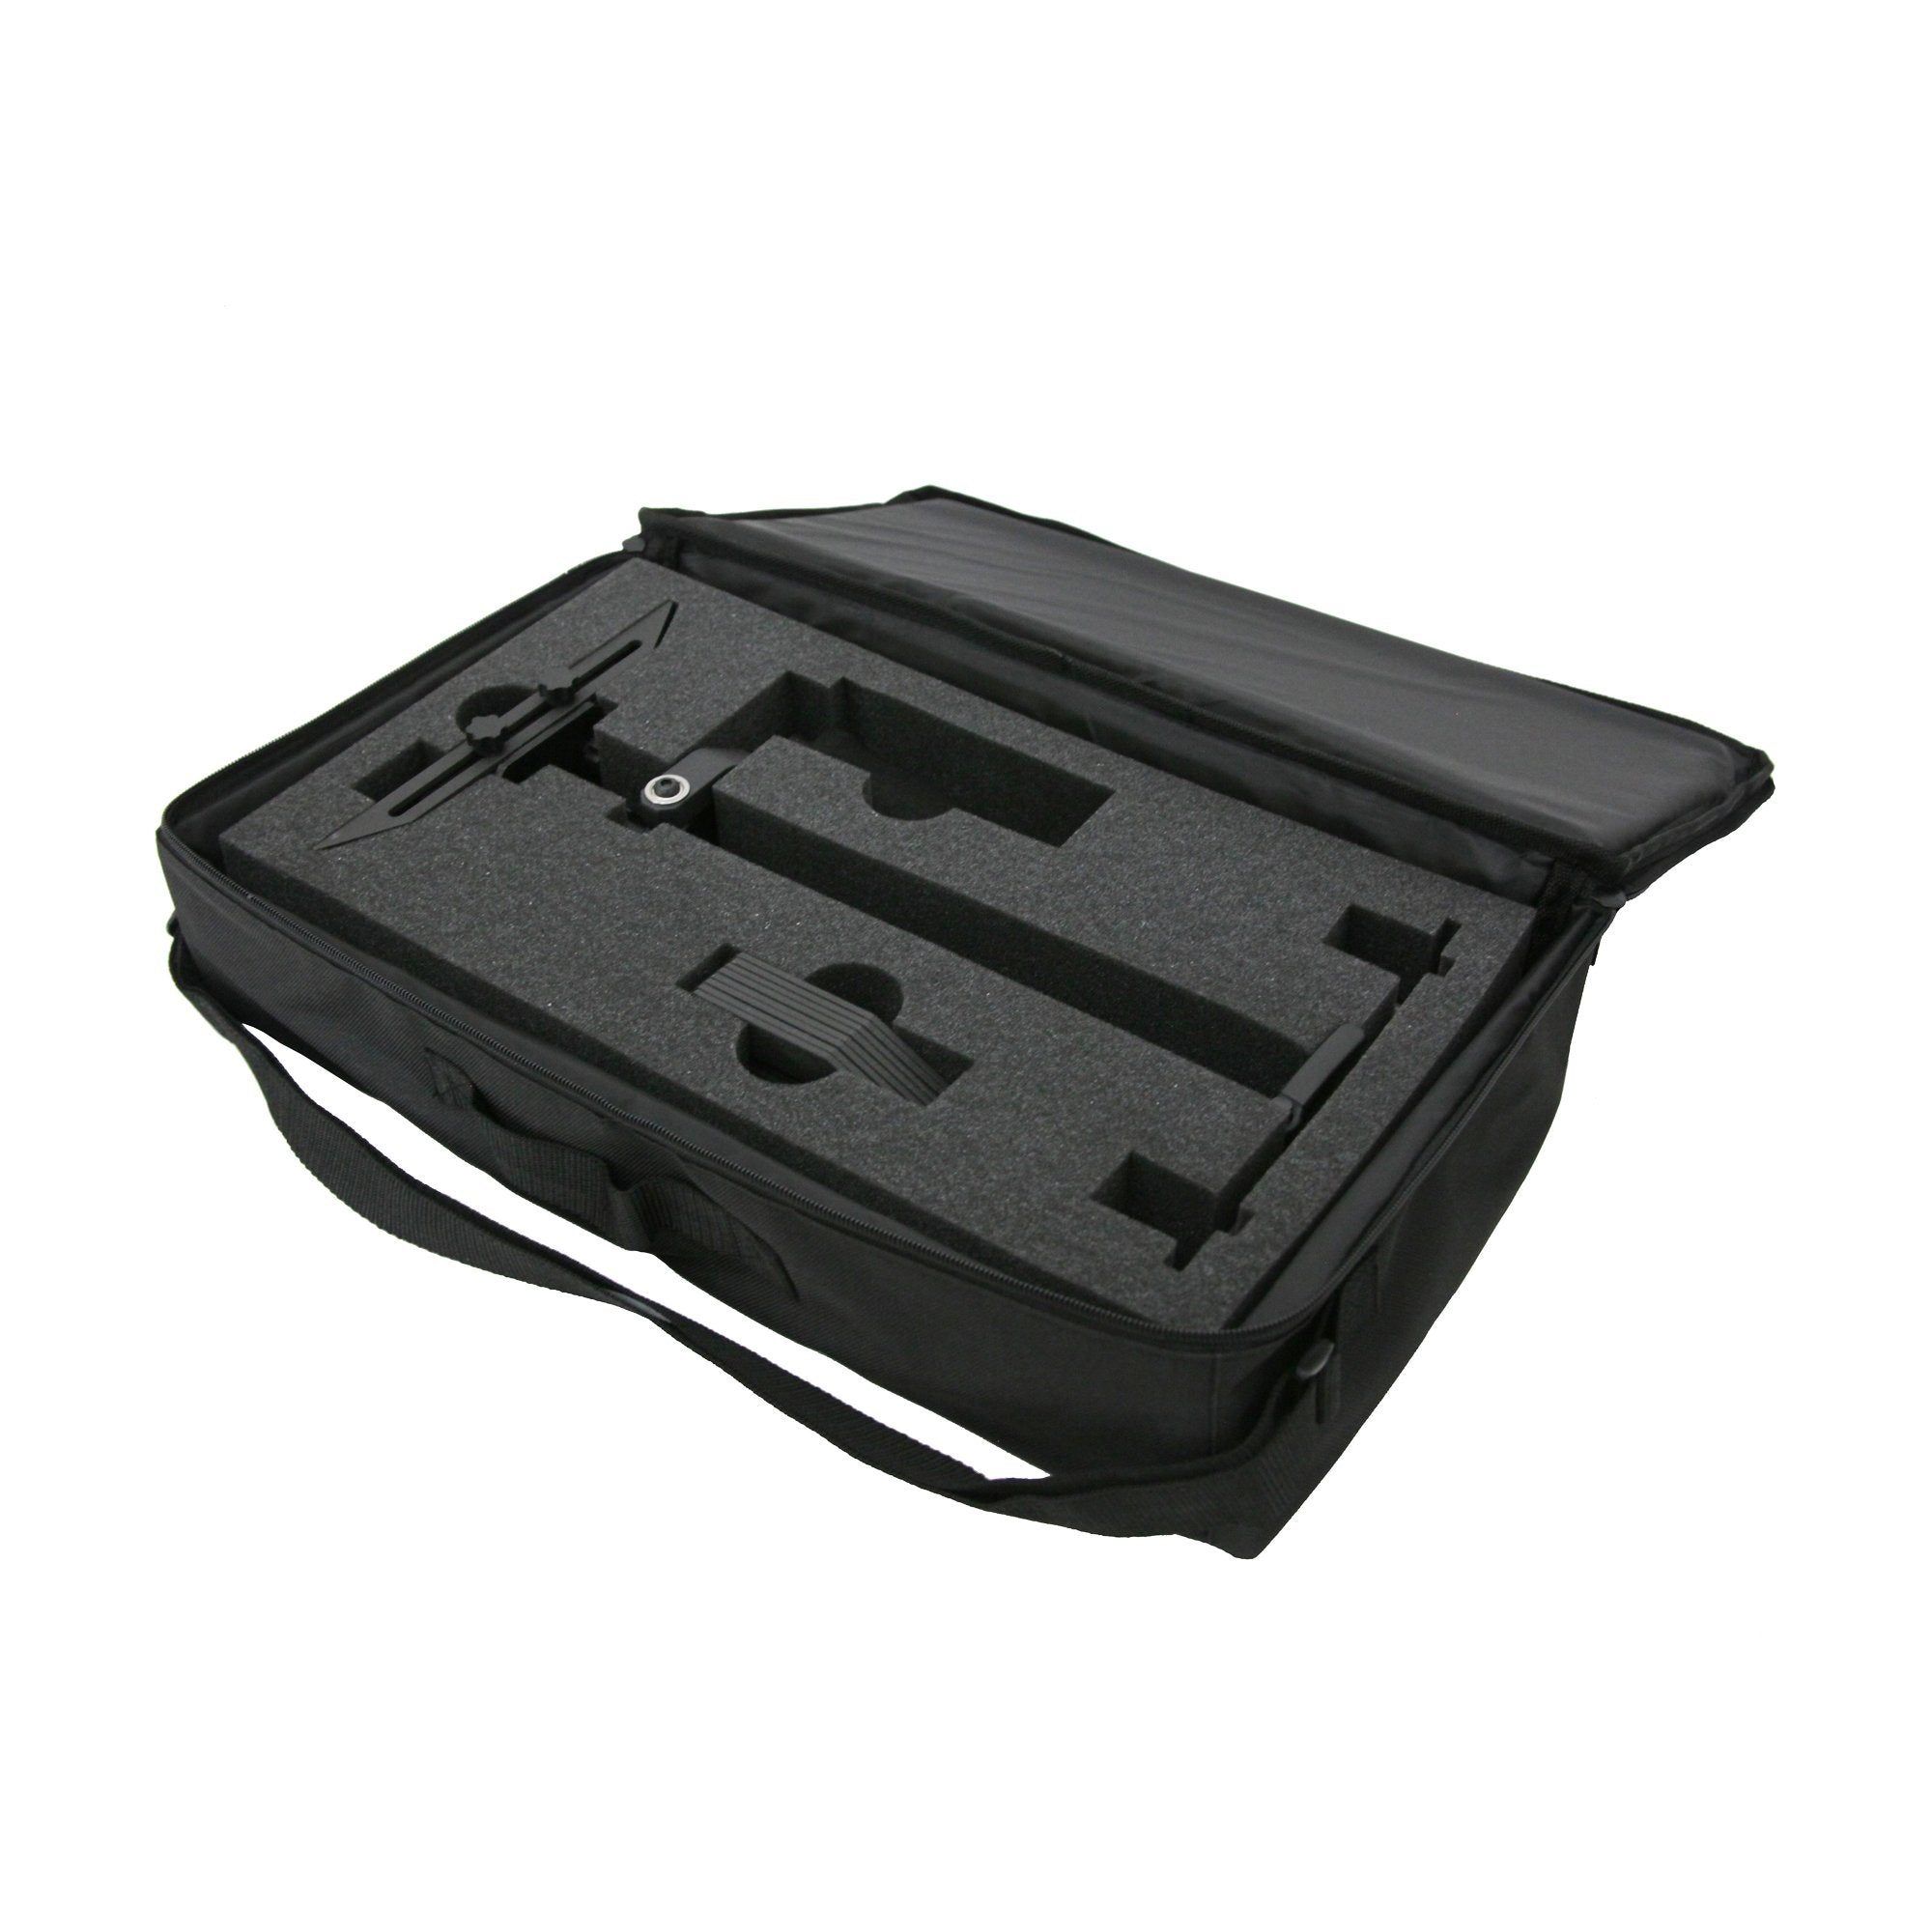 Autopilot DSLR Video Camera Gimbal Stabilizer and Bag Kit - PRODUCTS